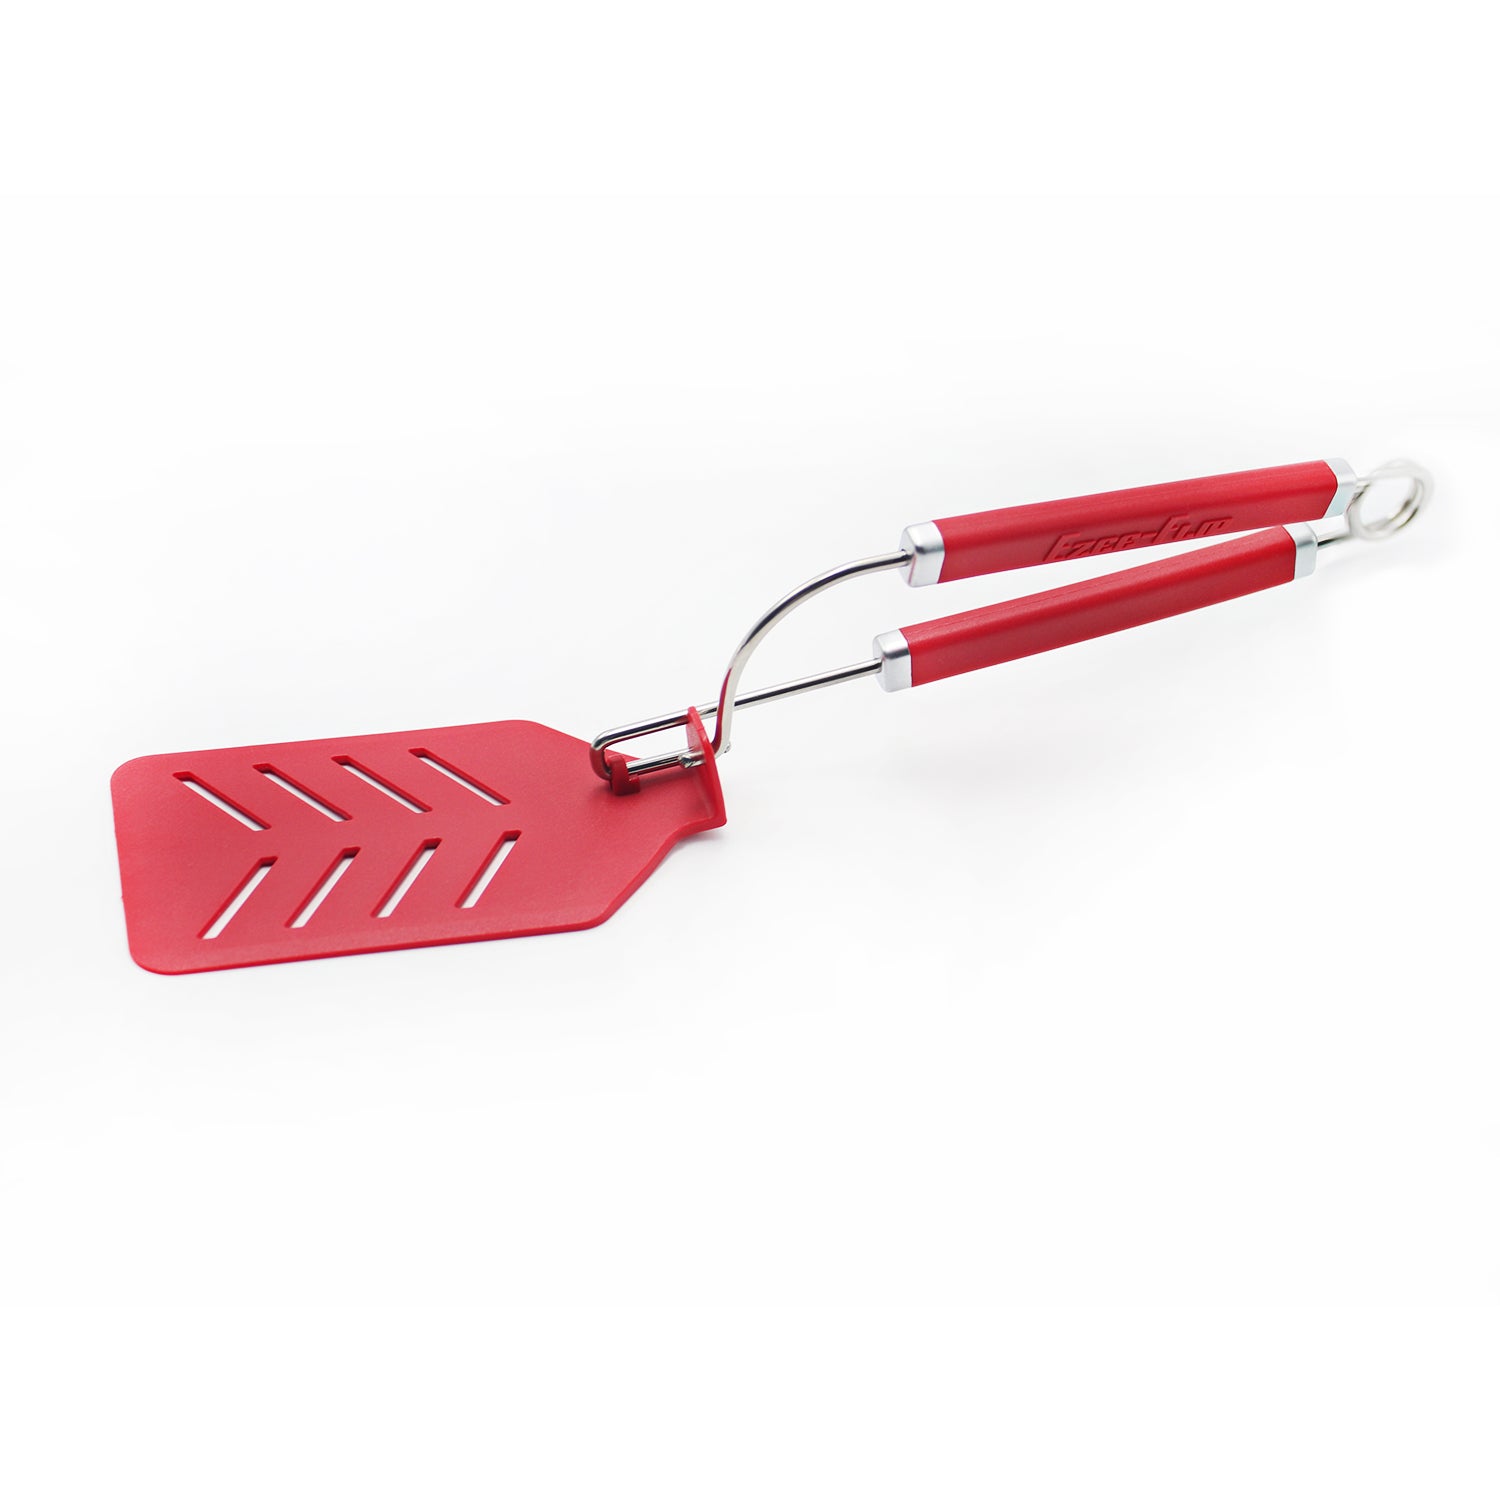 better spatula - Revolutionary - Dishwasher Safe - Flexible